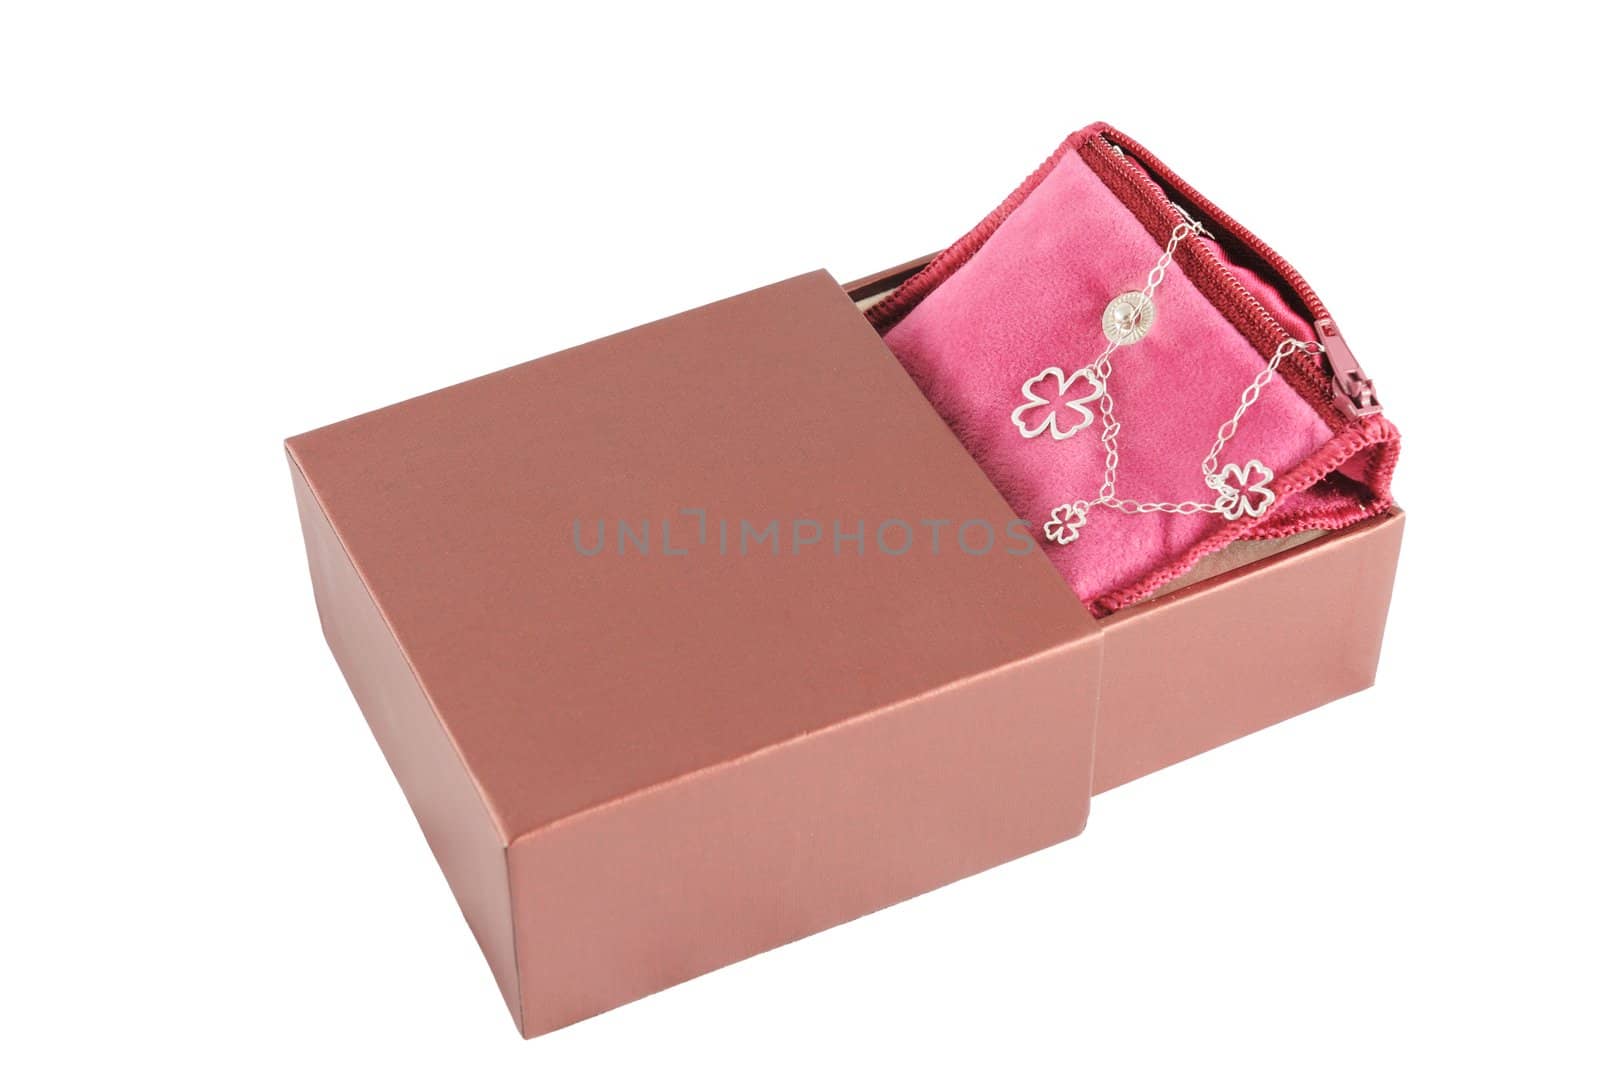 Gift box by raywoo